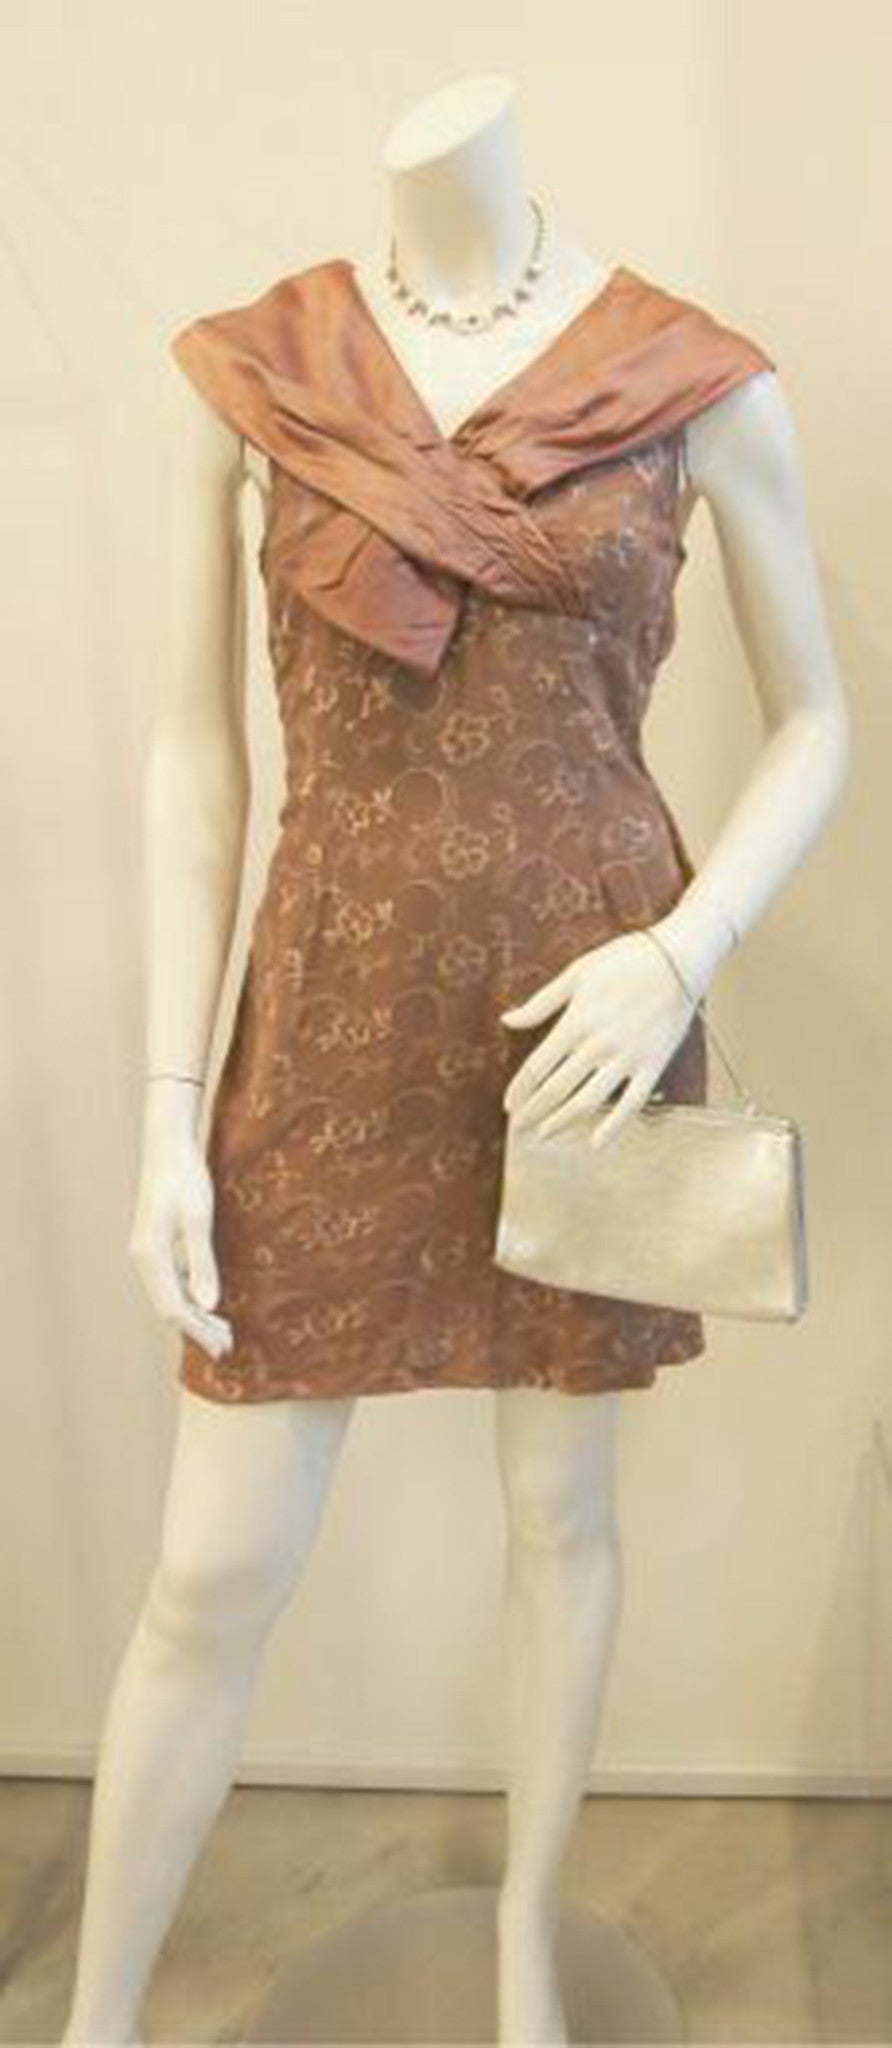 Mocha Cravings Vintage Lace Dress in Brown